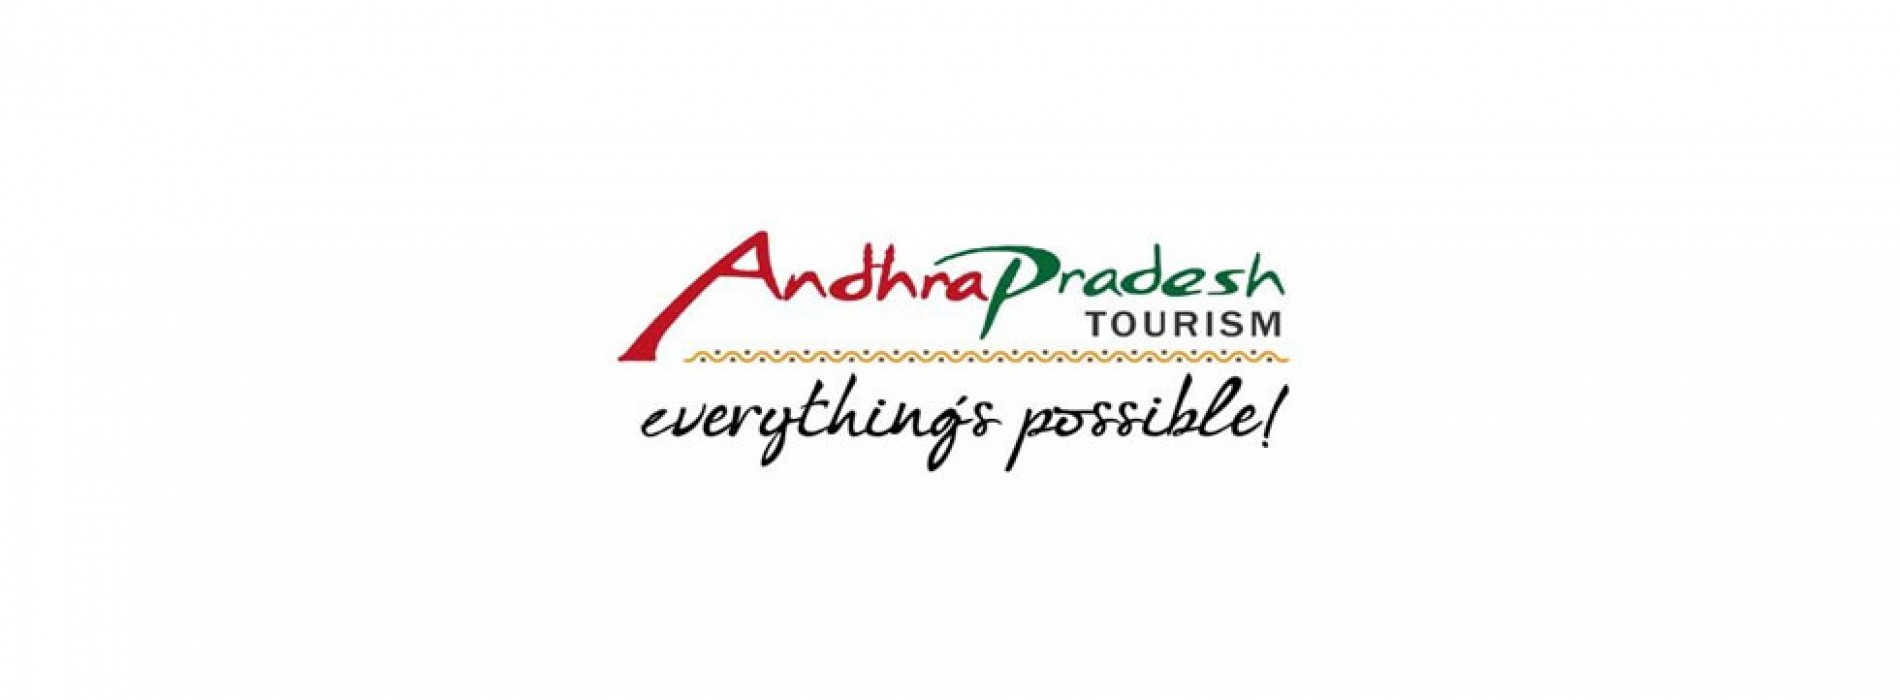 Ajay Devgn and Kajol to be the brand ambassadors of Andhra Pradesh tourism